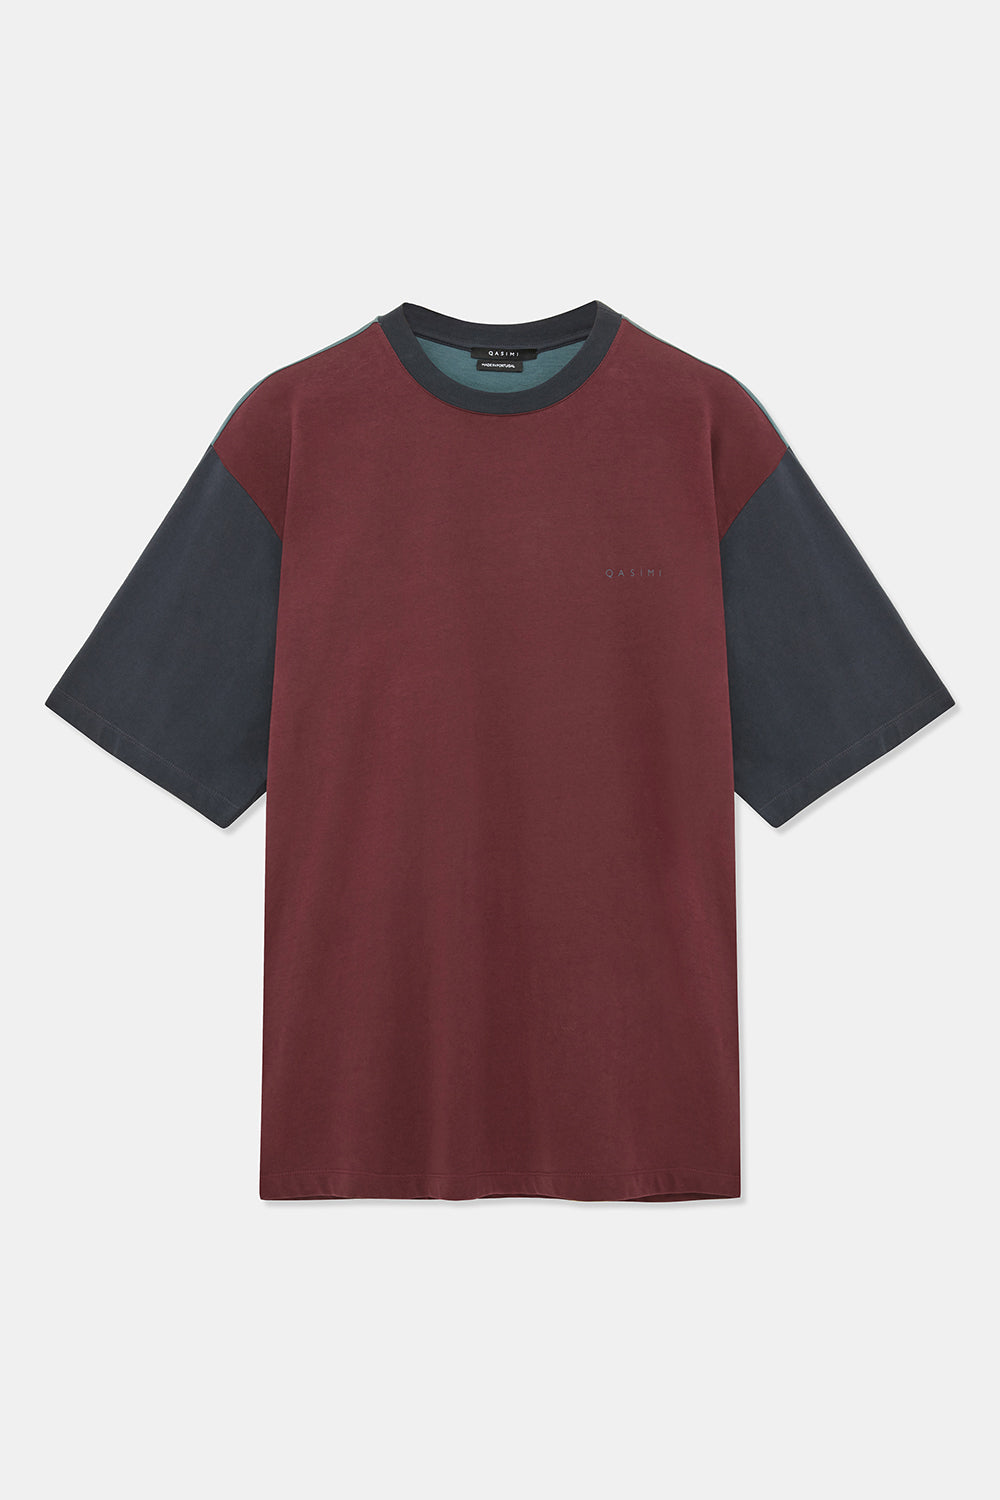 Hama Oversized Jersey T Shirt